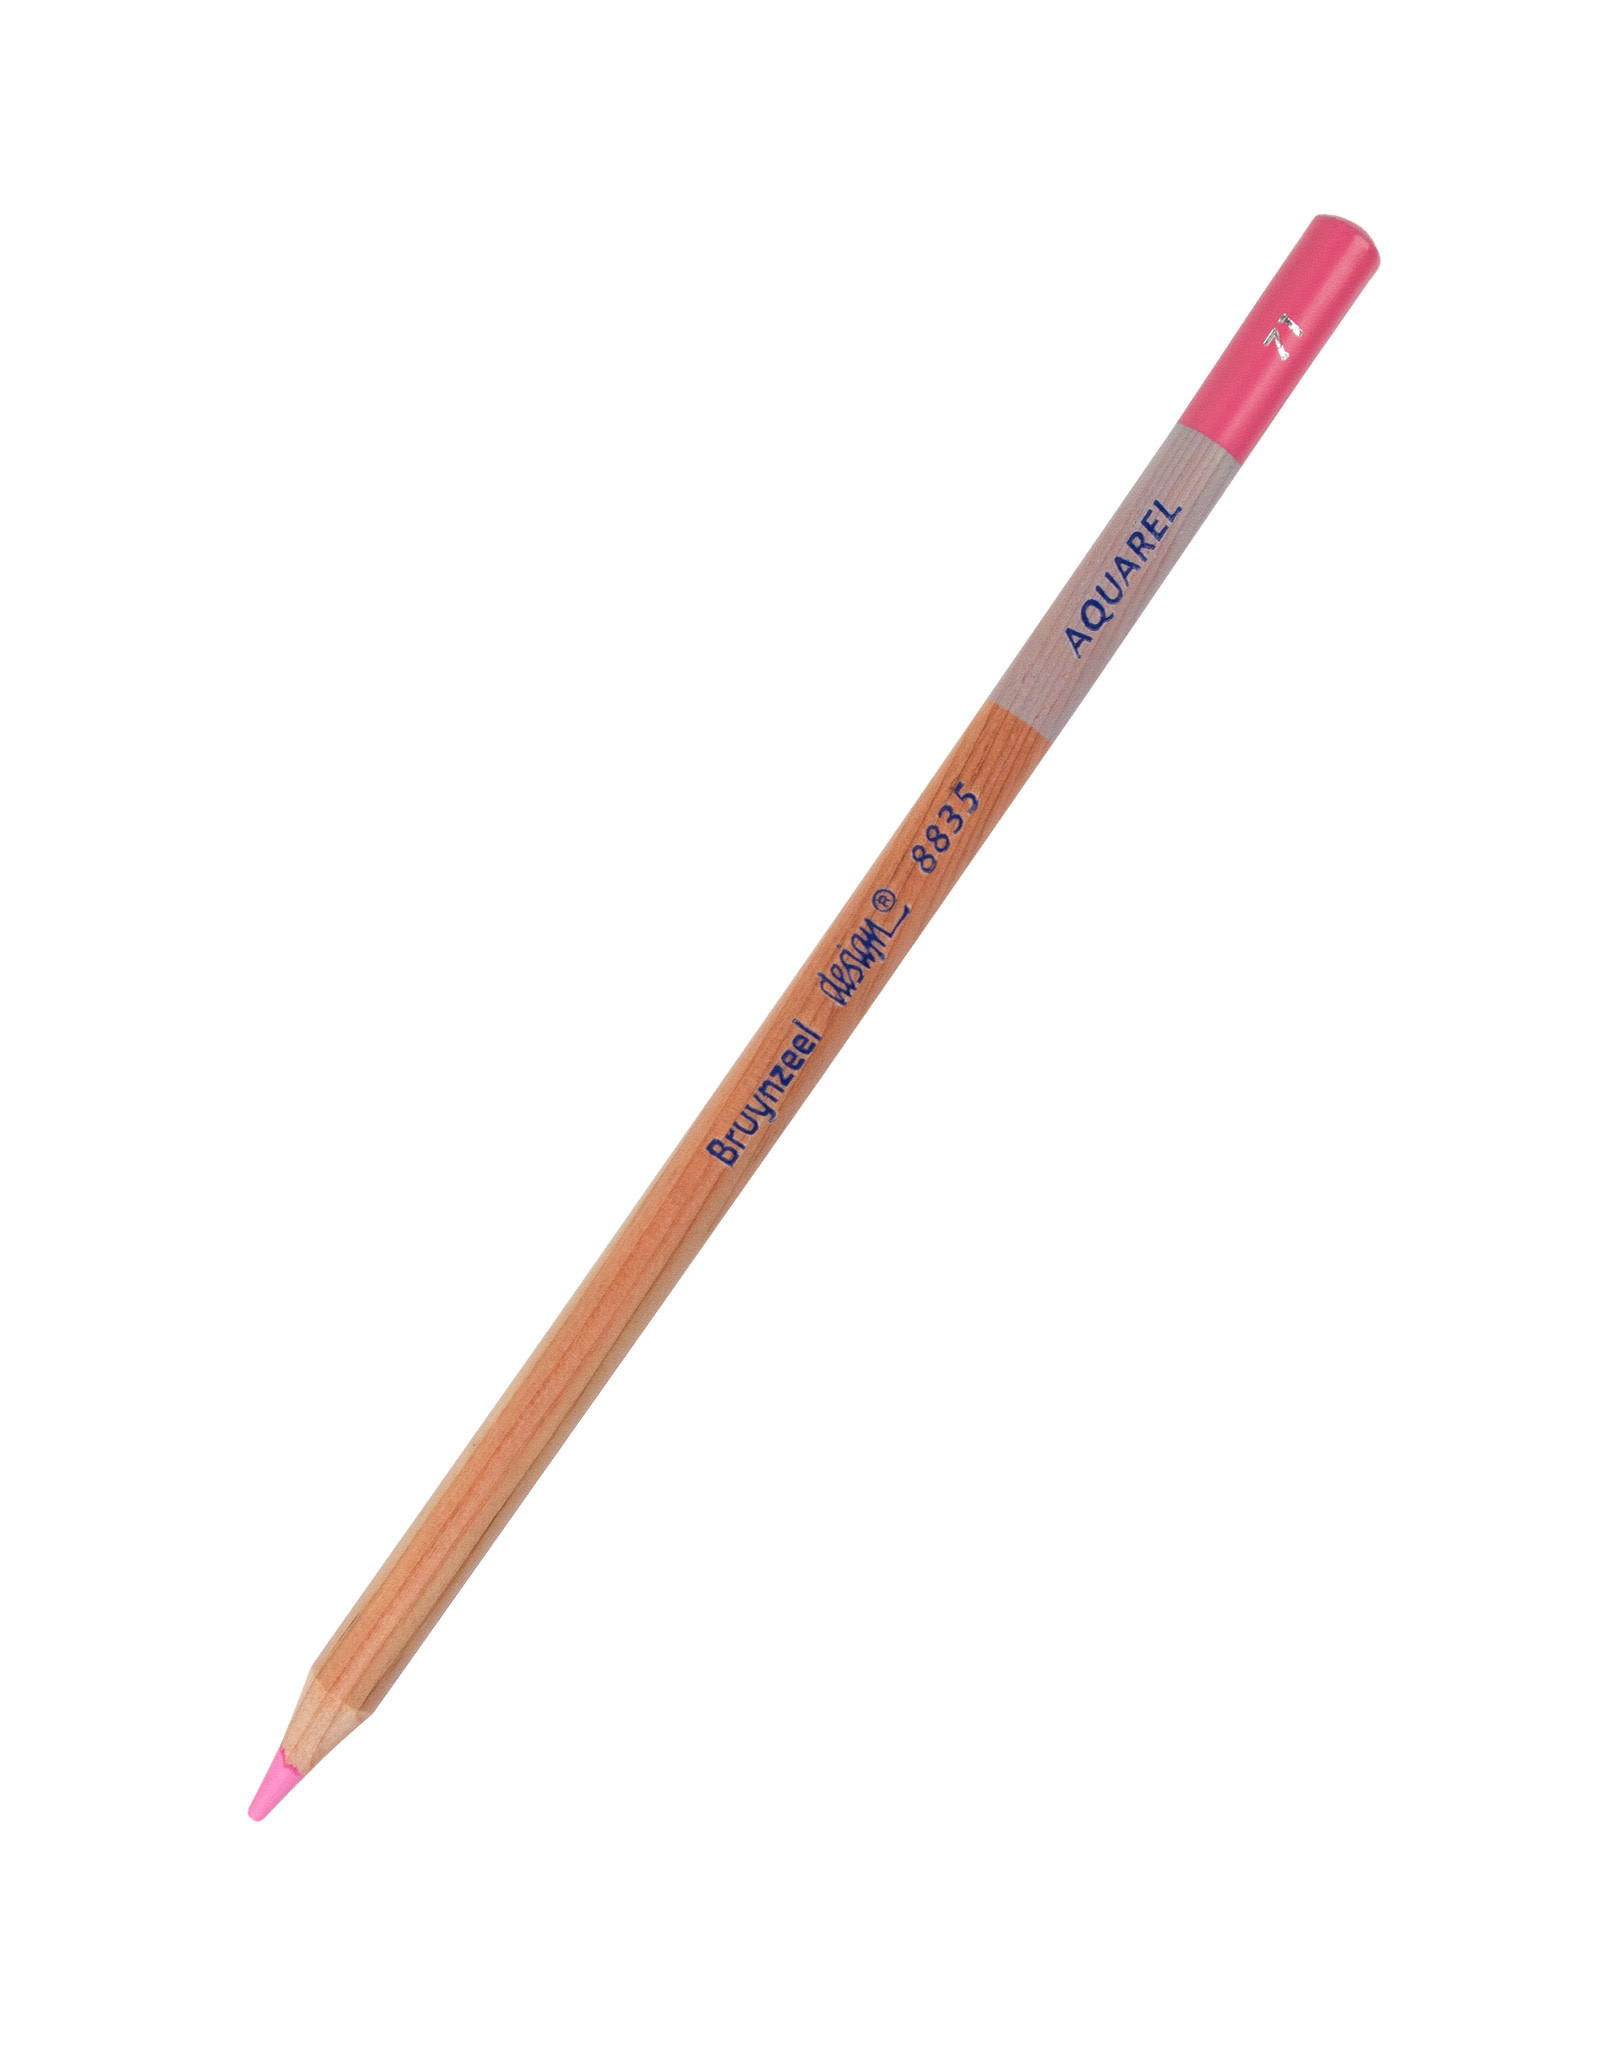 Royal Talens Bruynzeel Design Aquarel Pencil, Candy Pink